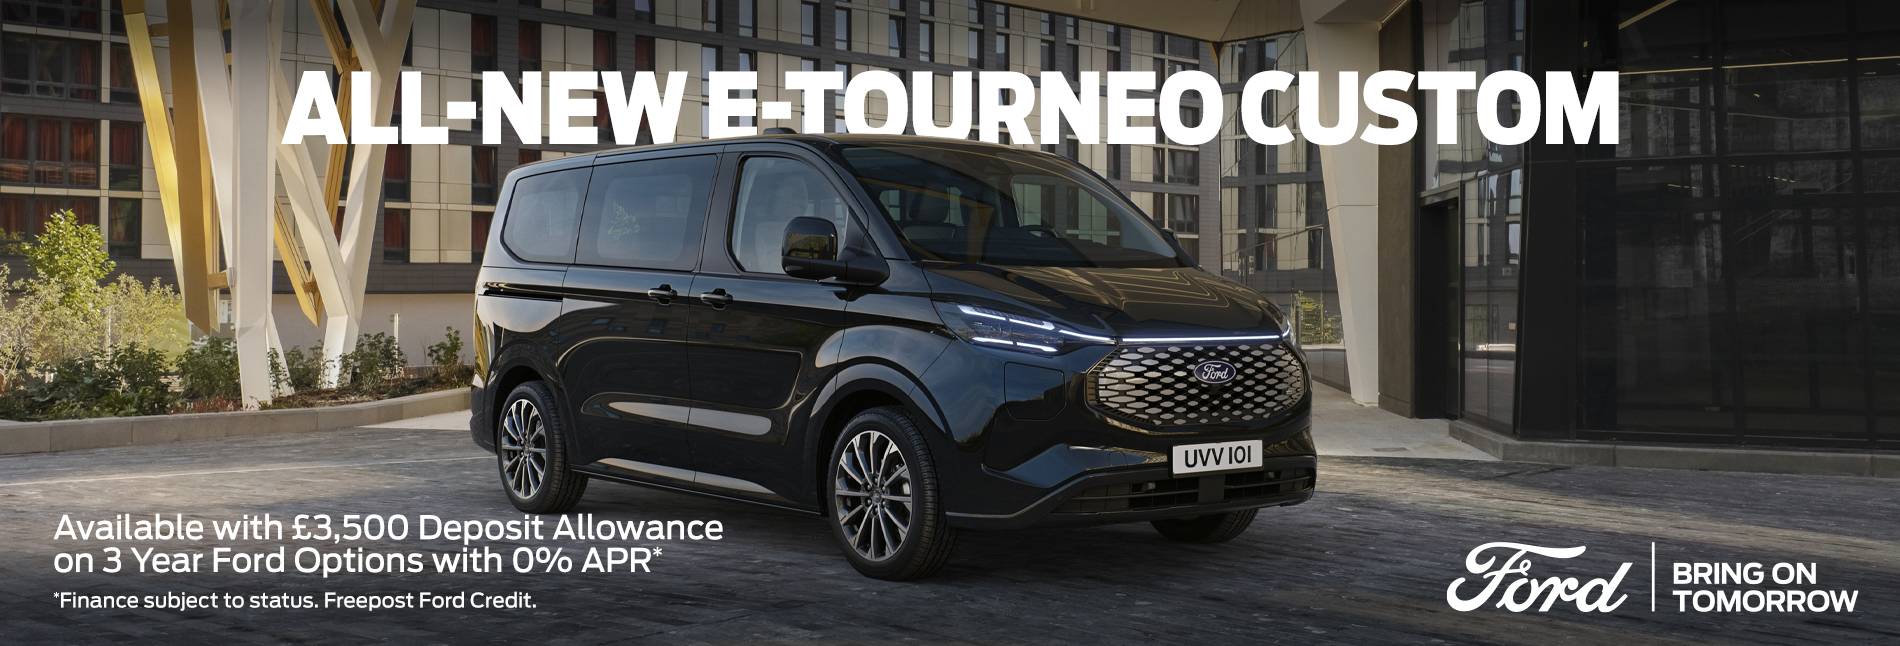 The All-New E-Tourneo Ford Custom